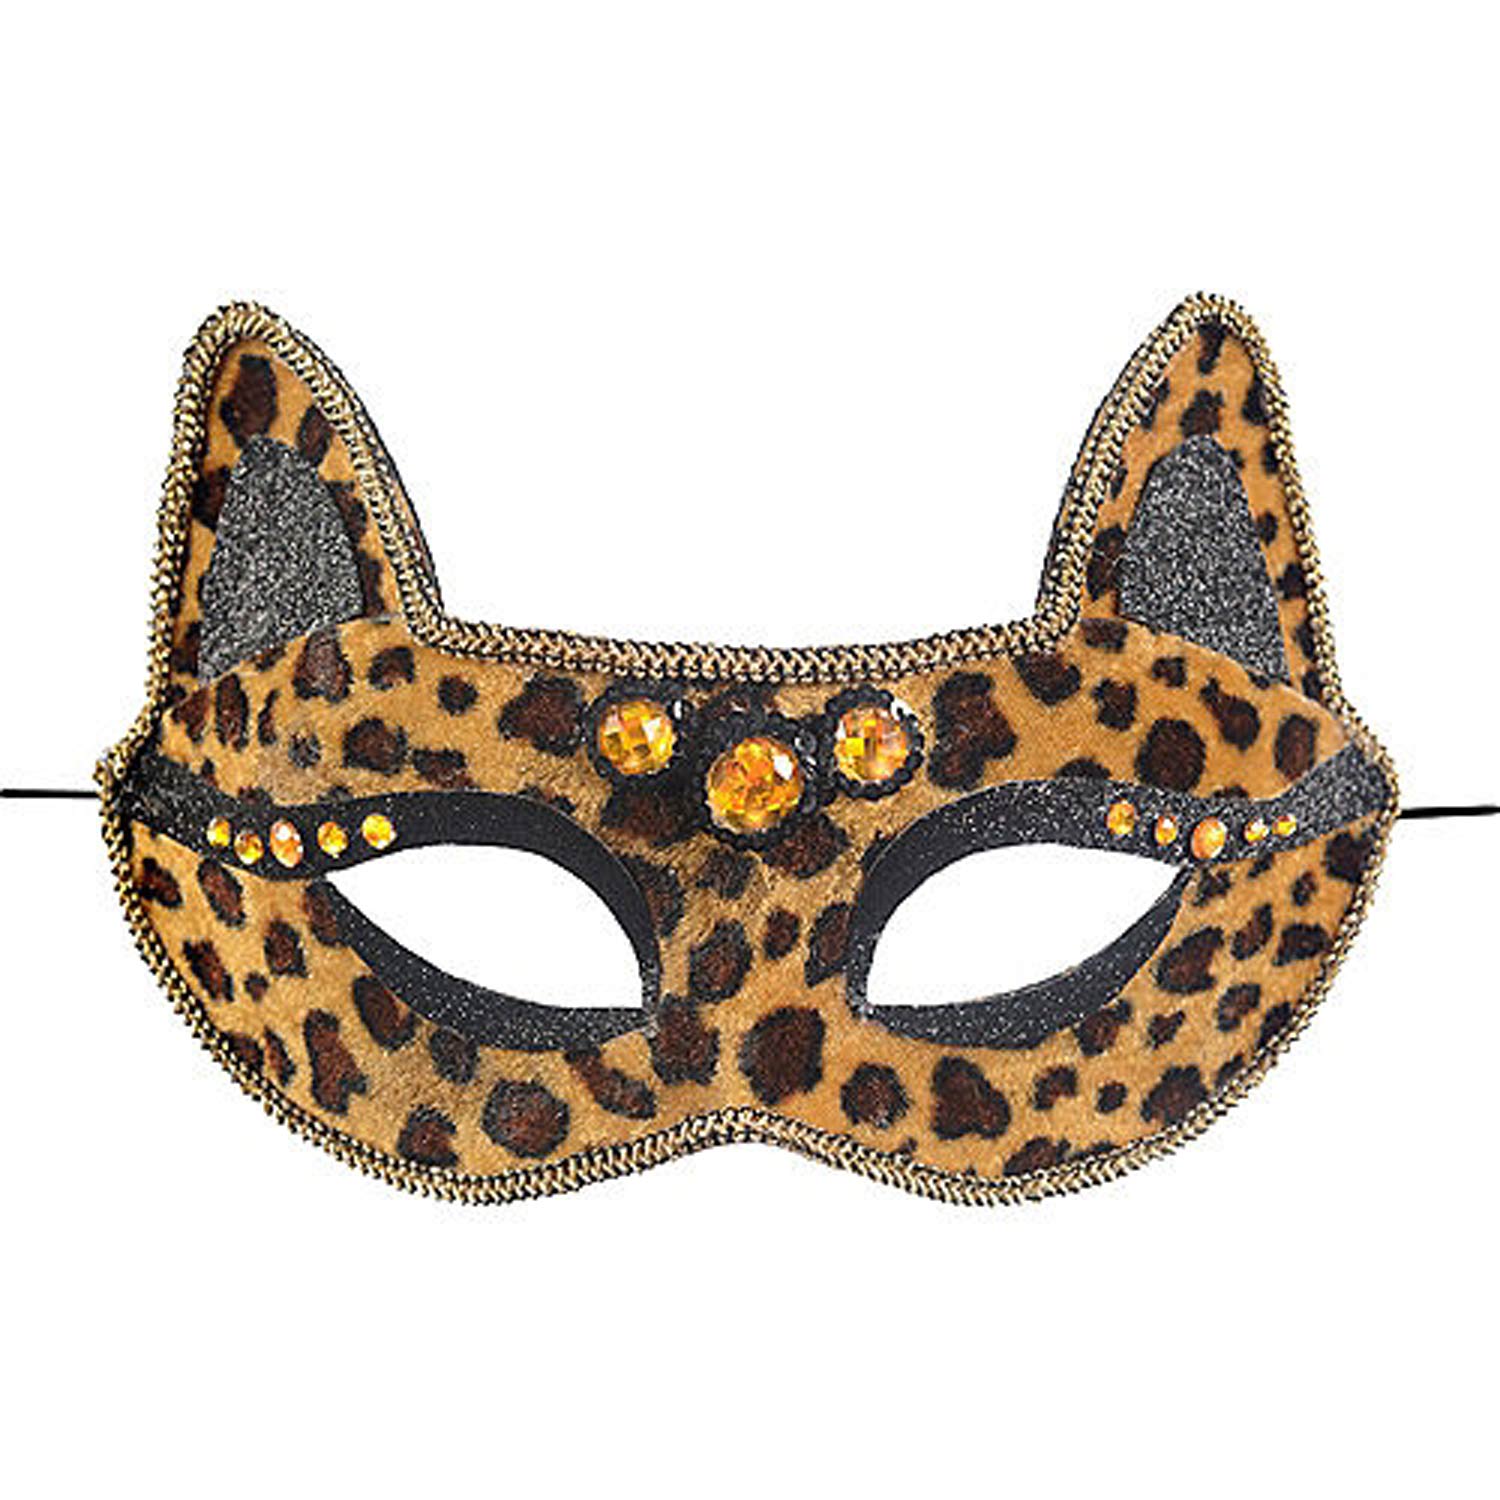 Adult Cheetah Mask